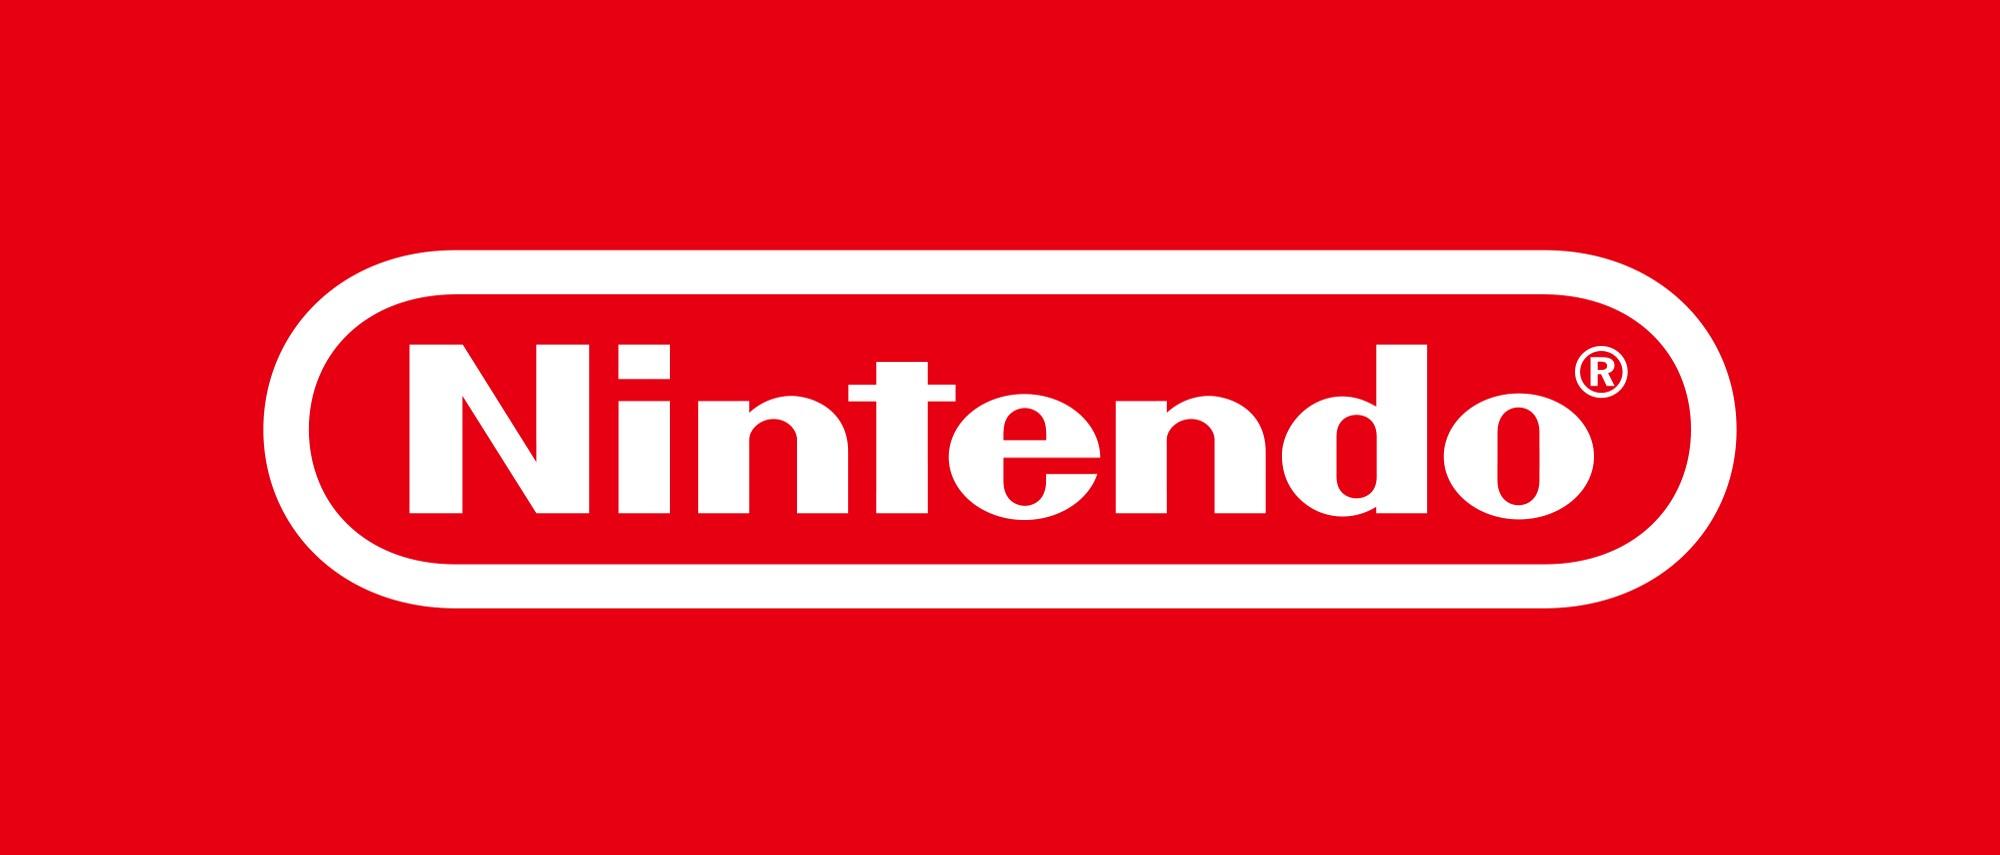 Nintendo_logo_Nov2018.jpg